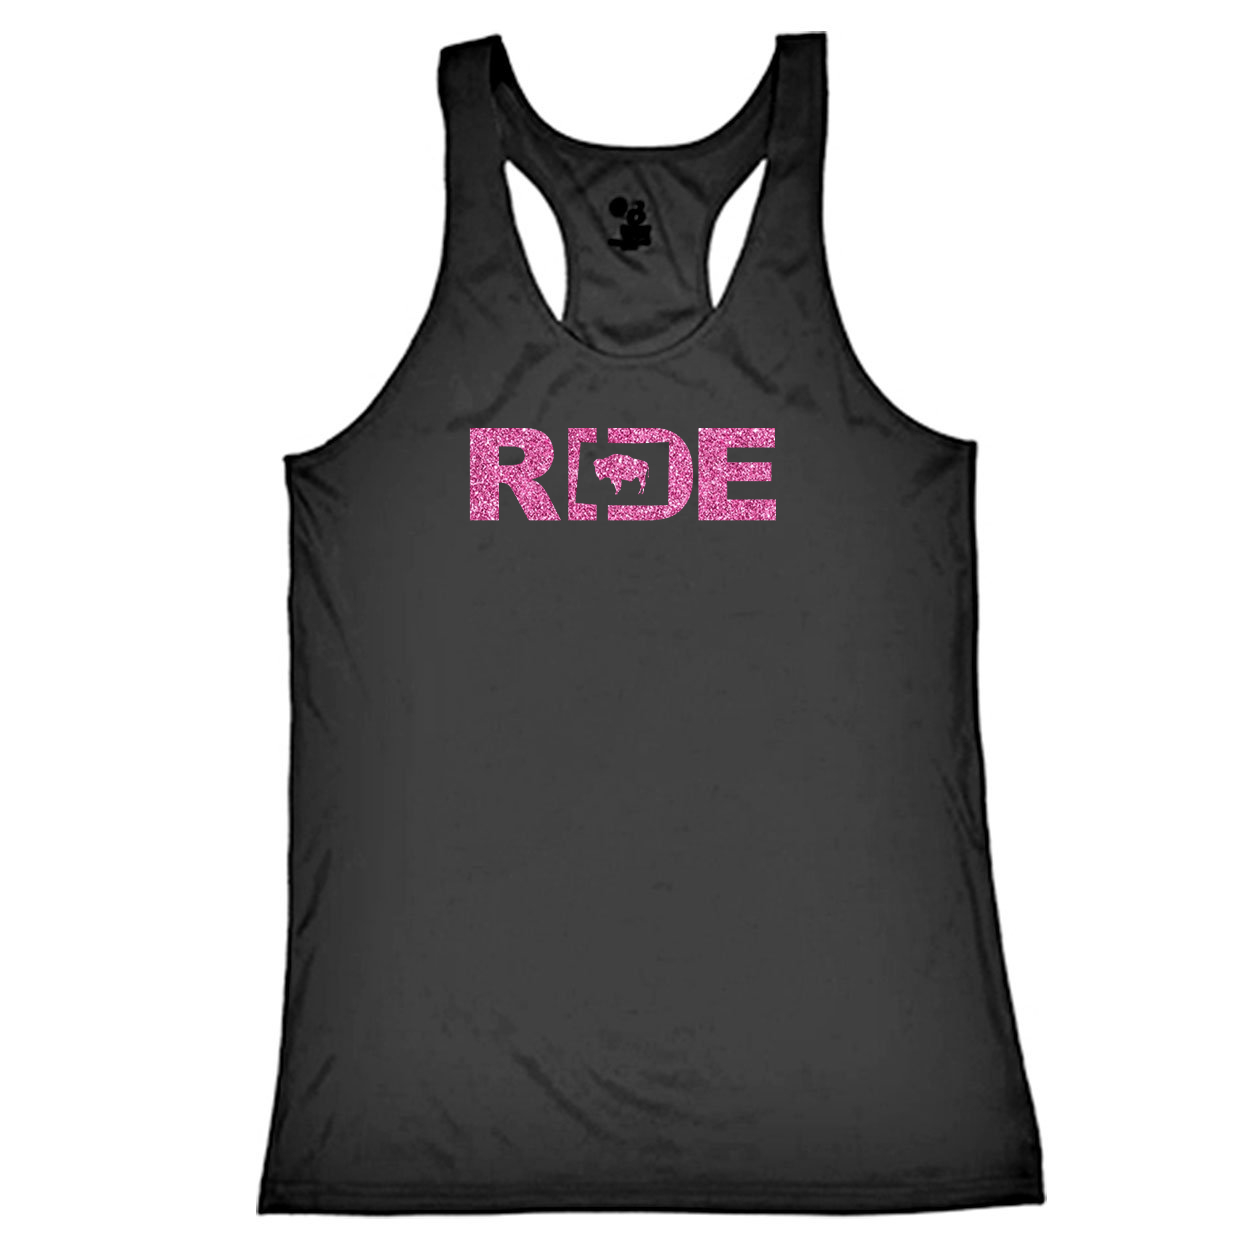 Ride Wyoming Classic Youth Girls Performance Racerback Tank Top Black (Glitter Pink Logo)